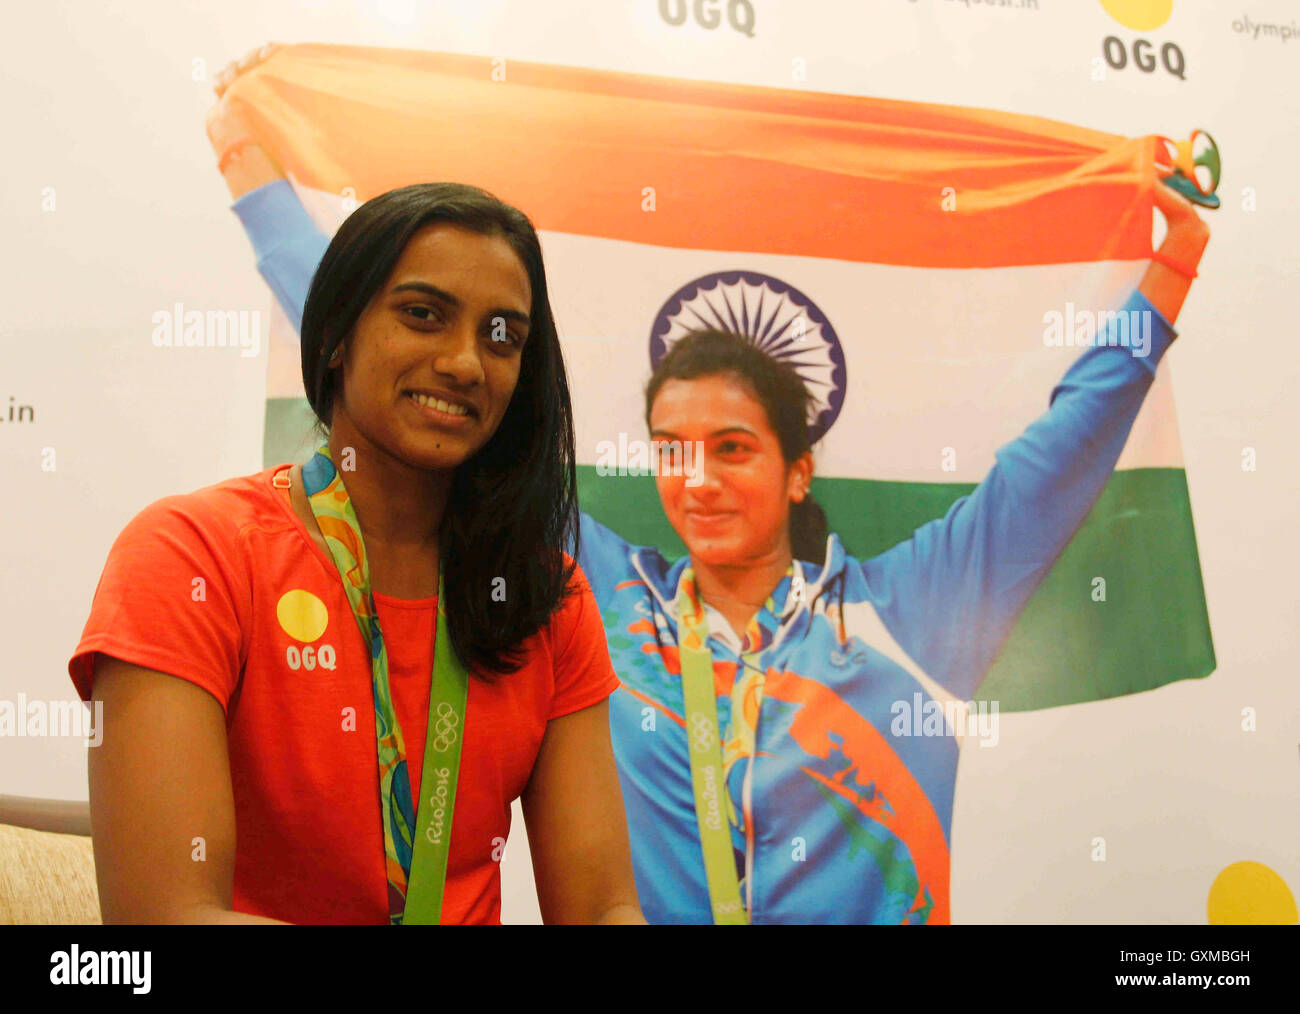 Indian badminton player and Rio Olympics silver medallist P V Sindhu during the felicitation function OGQ Bombay Mumbai Maharashtra India Stock Photo